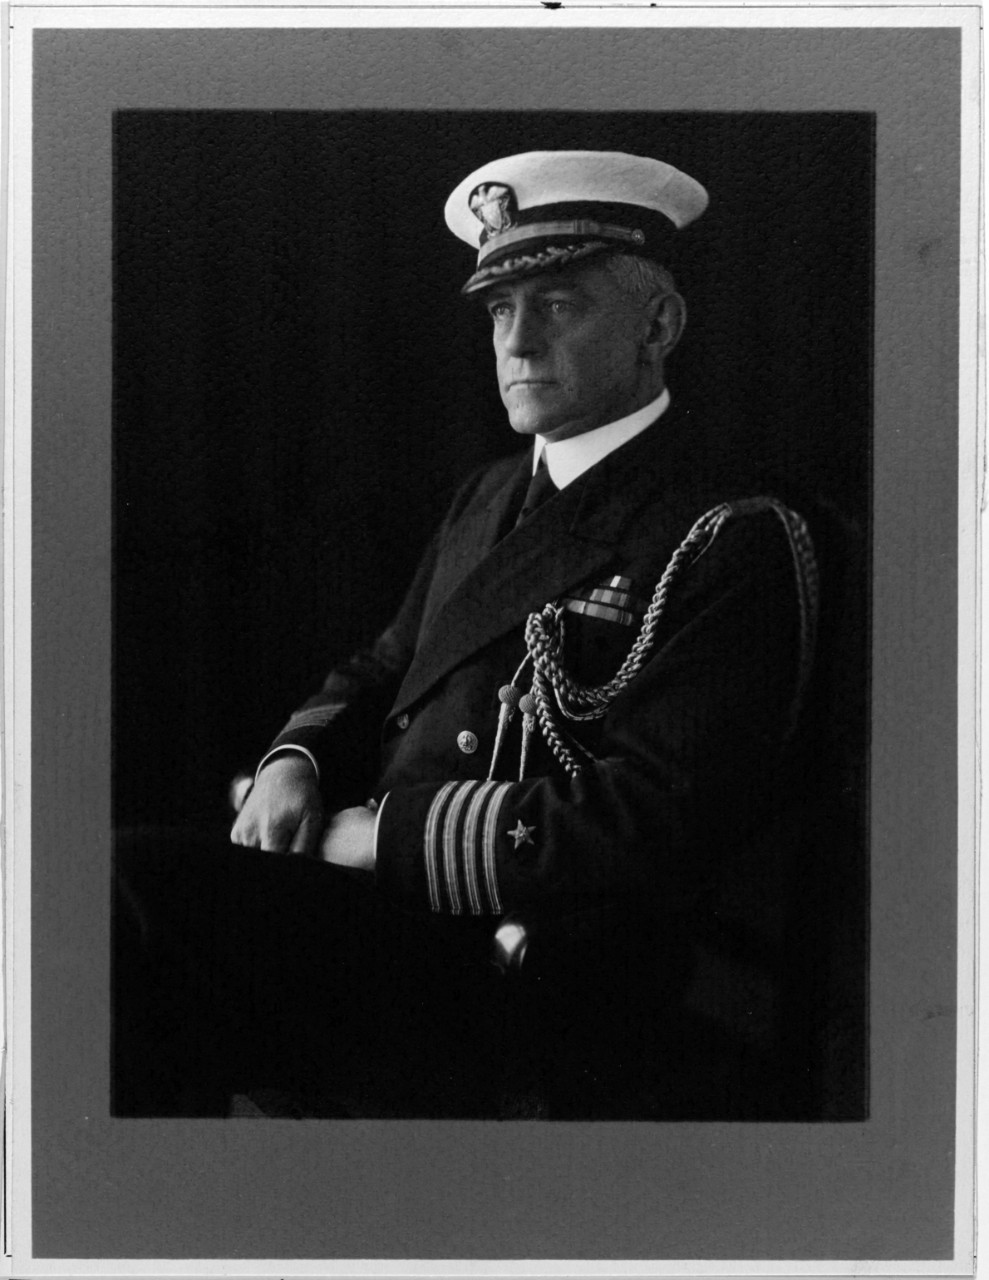 Kenneth G. Castleman, Captain, USN